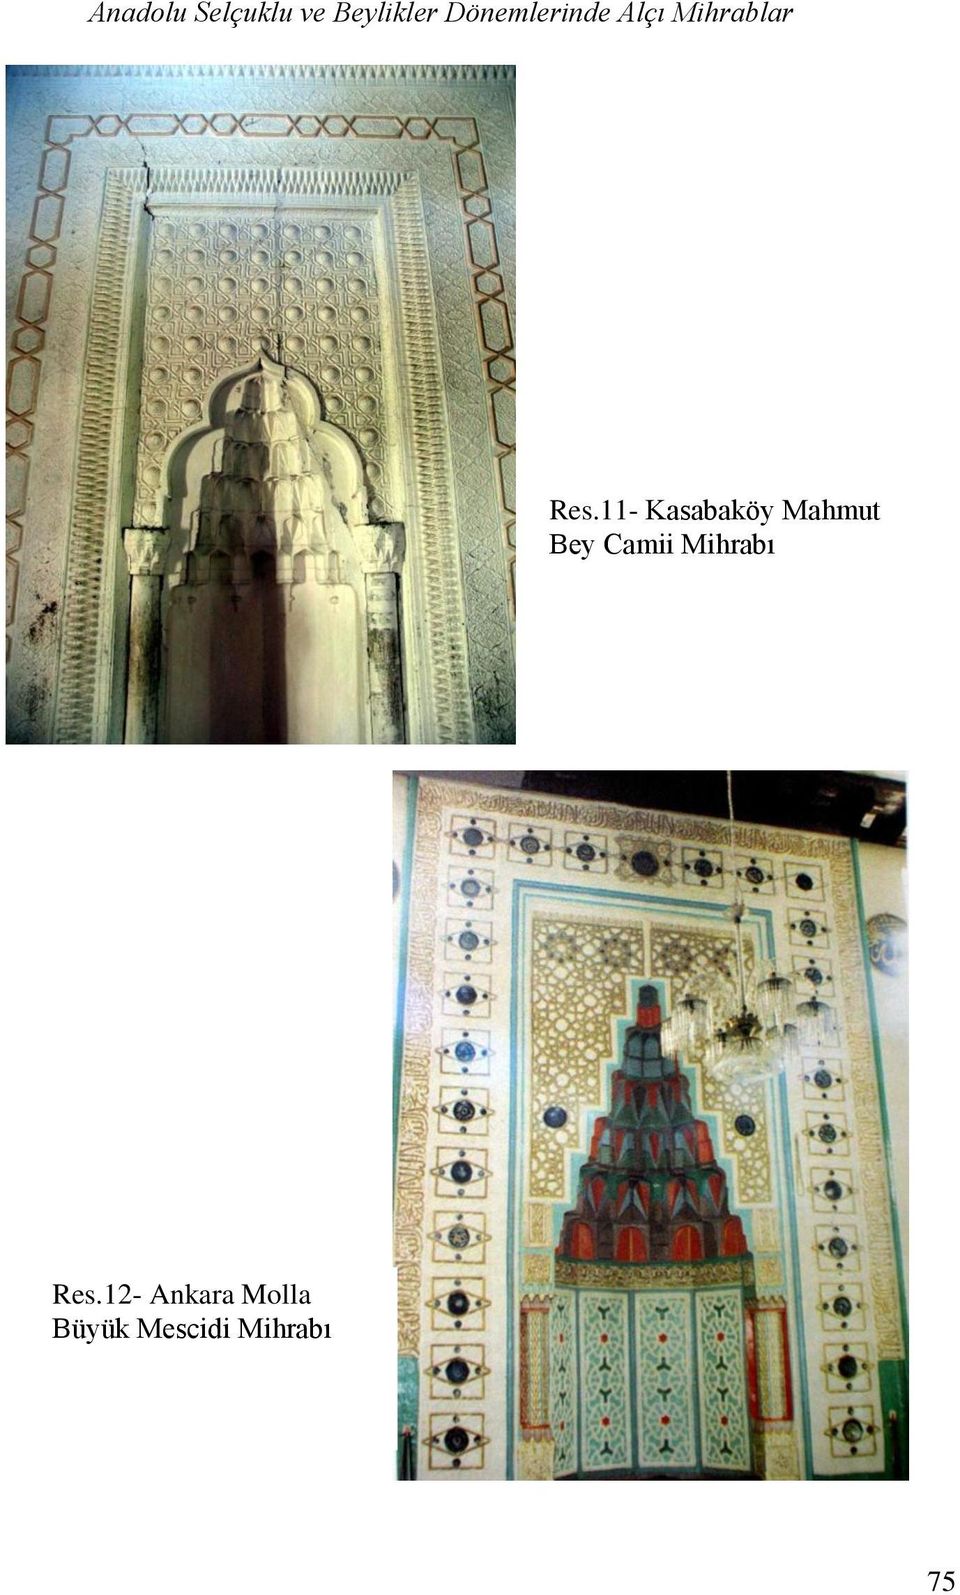 11- Kasabaköy Mahmut Bey Camii